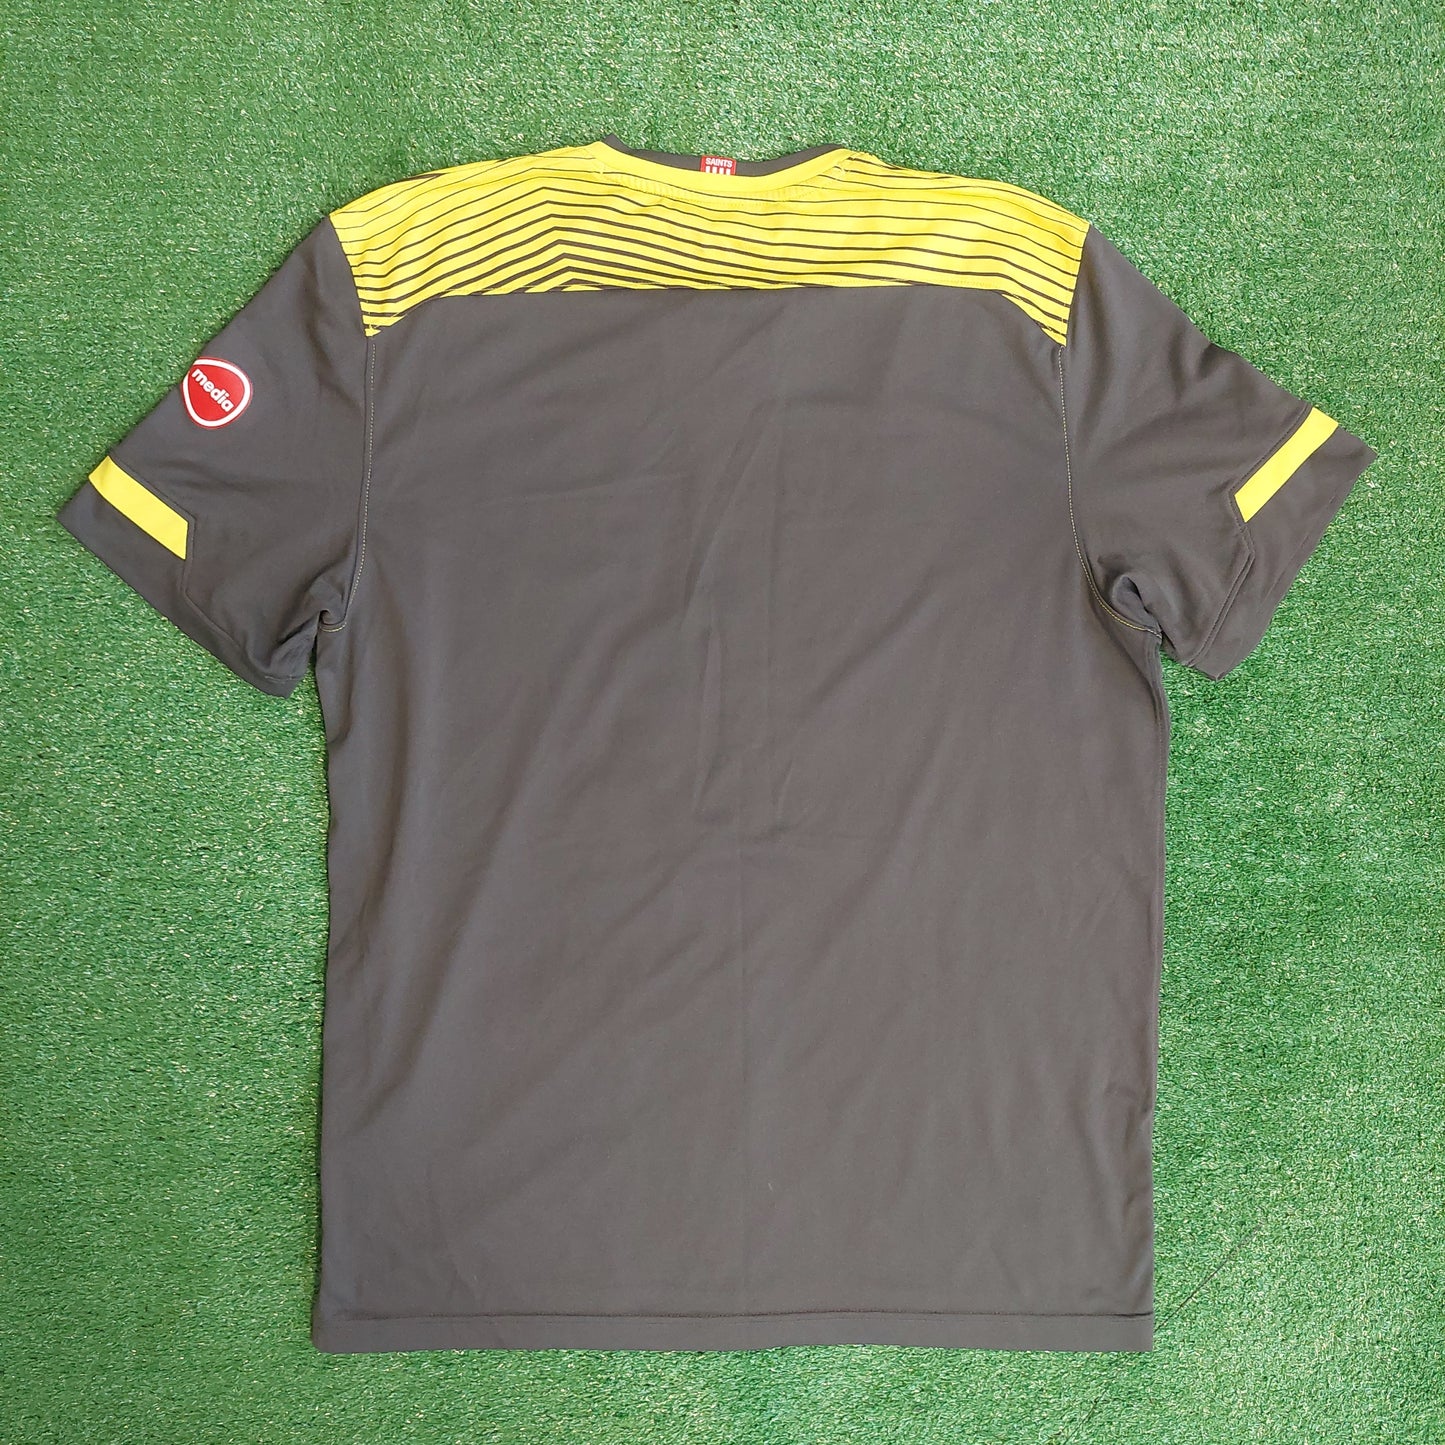 Southampton FC 2019/20 Away Shirt (Excellent) - Size L